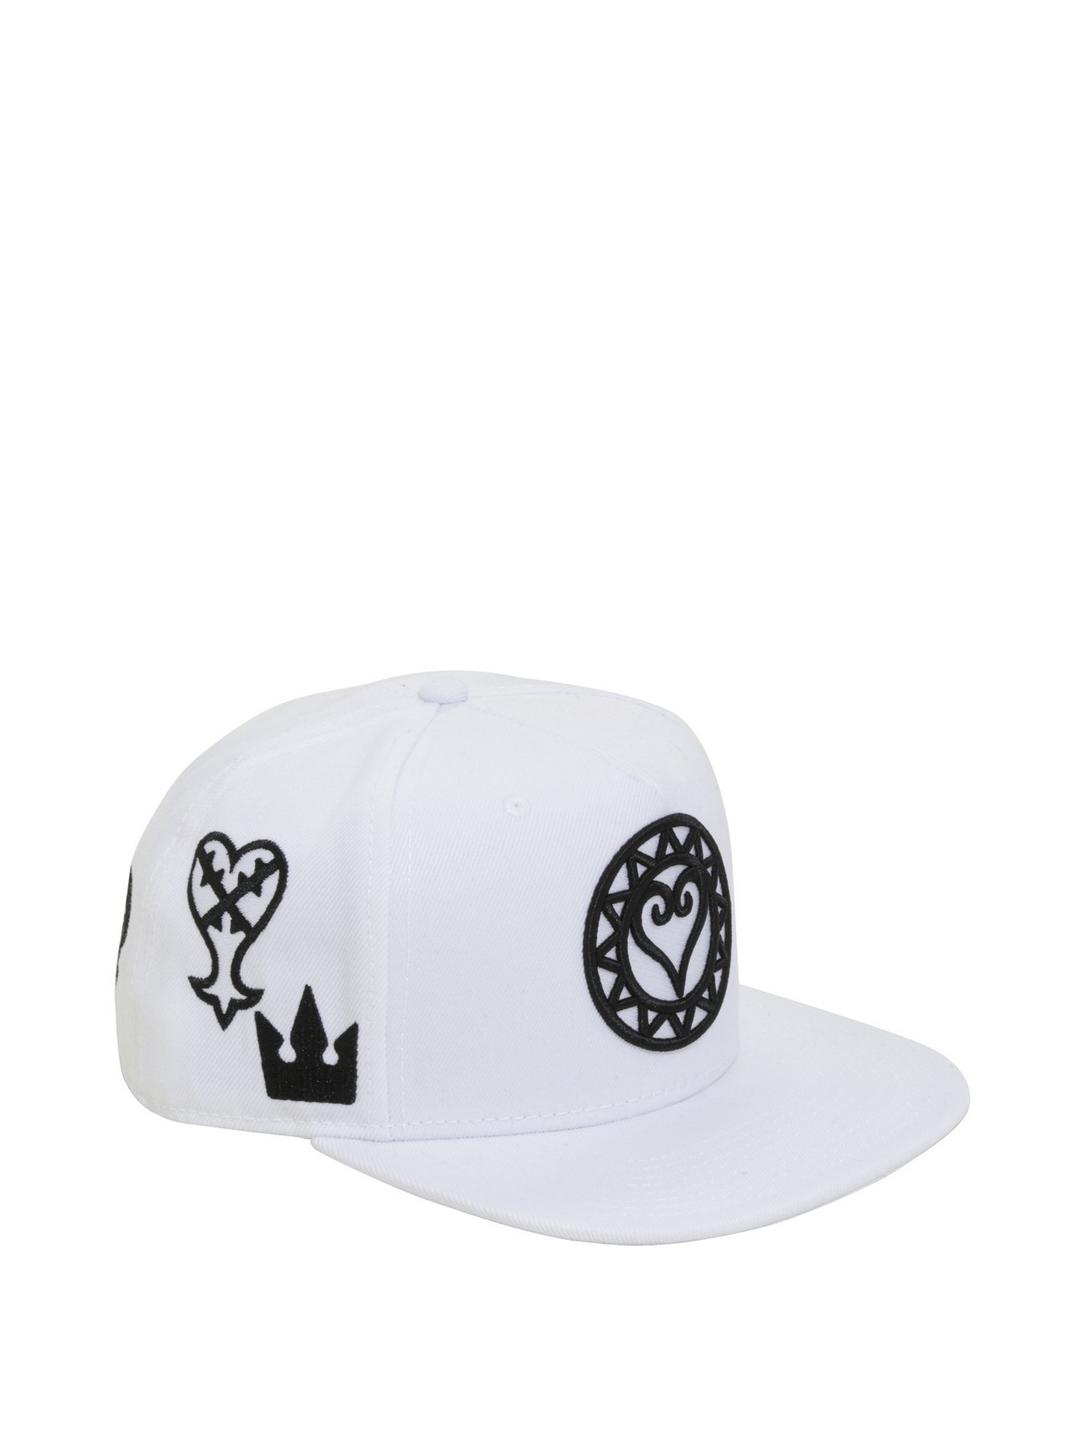 Disney Kingdom Hearts Embroidered Snapback Hat, , hi-res